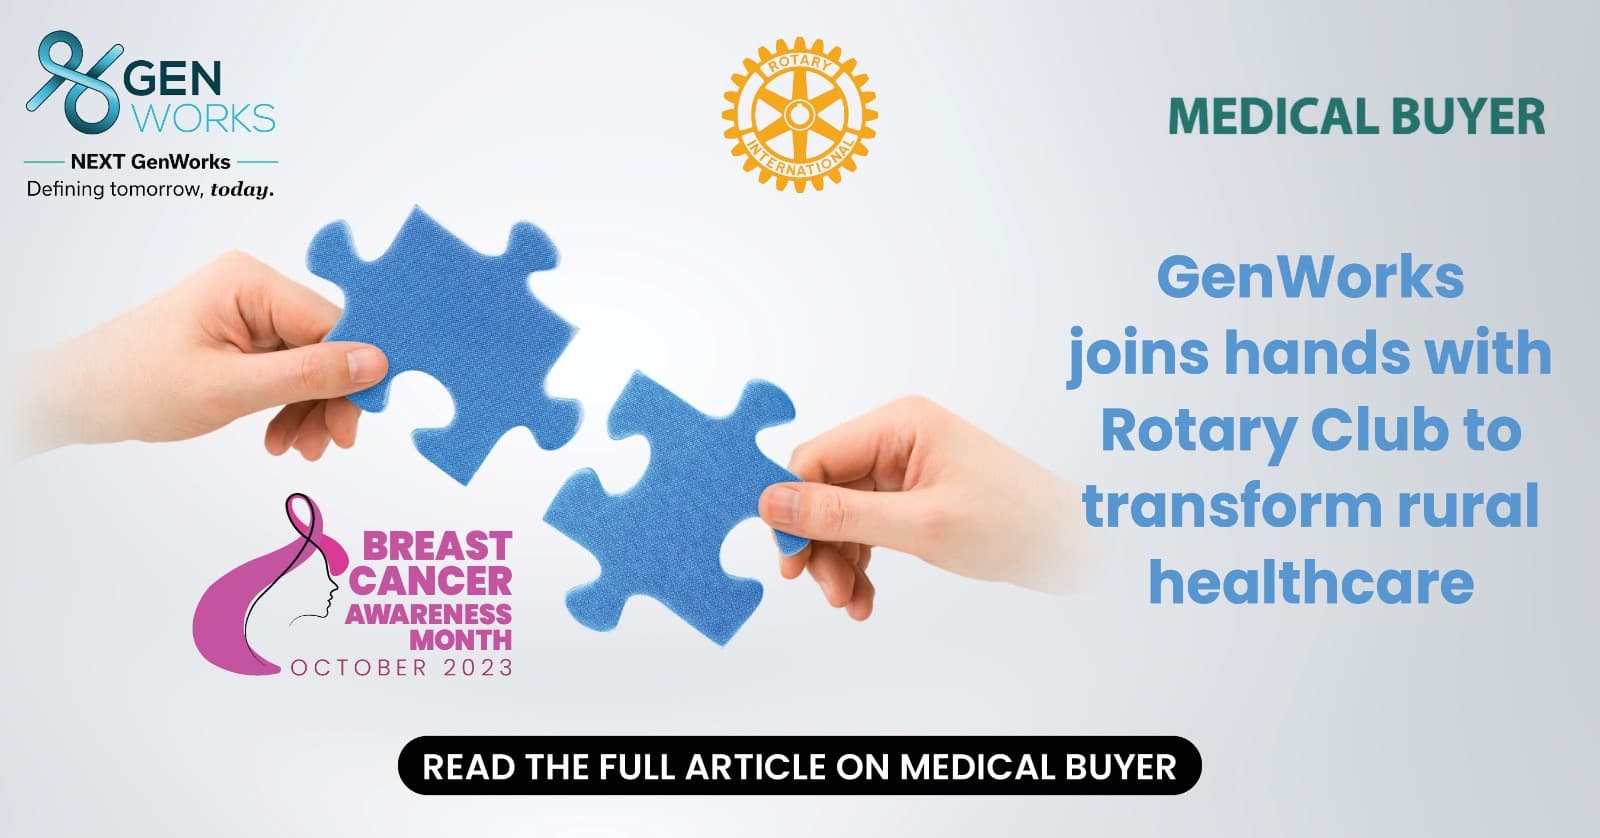 Rotary Club To transformr rural healthcare